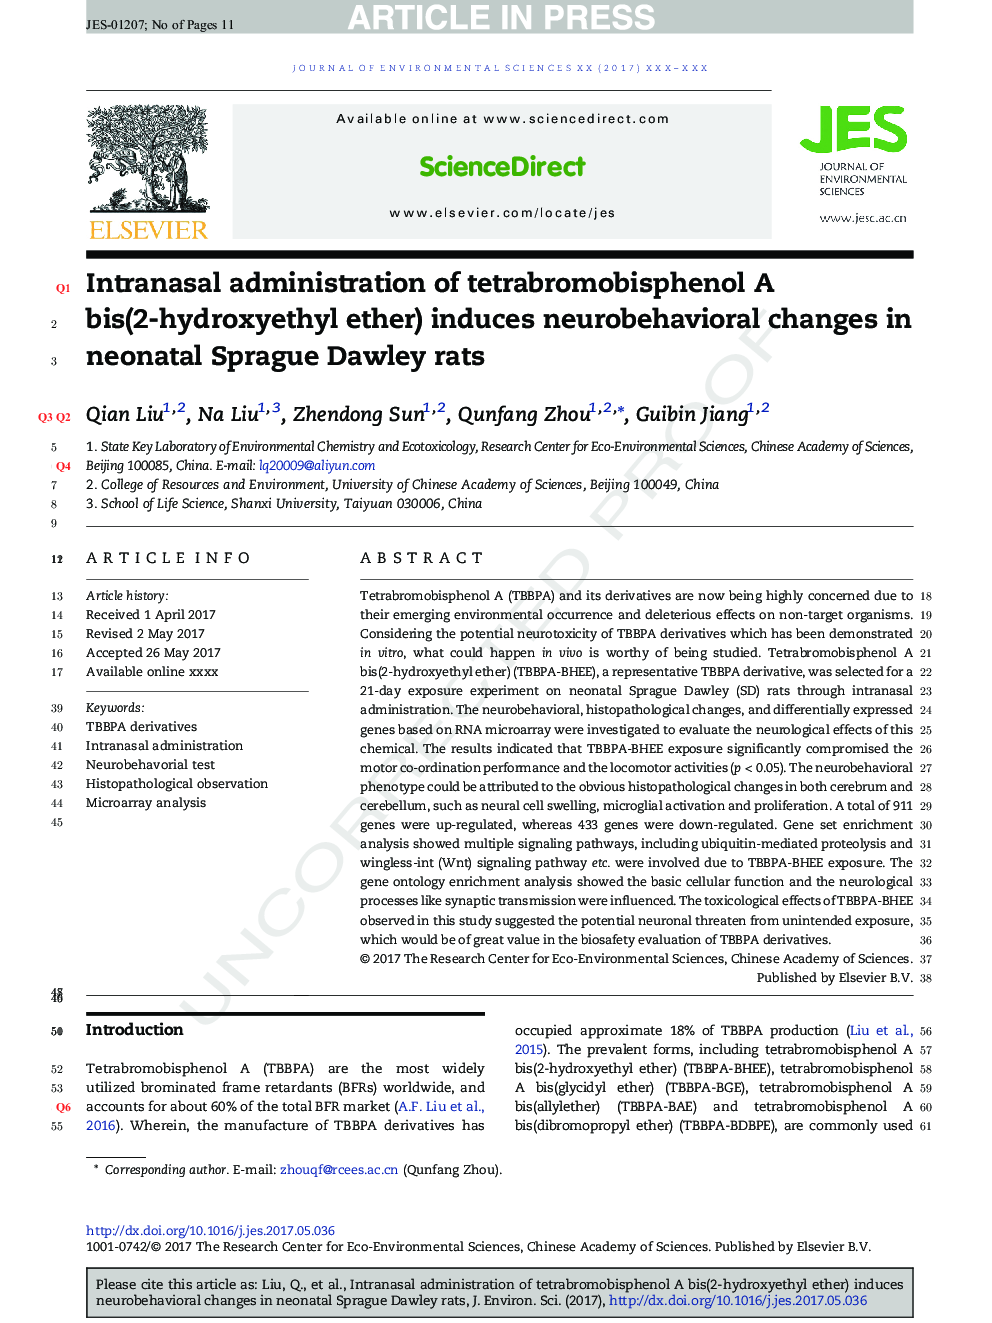 Intranasal administration of tetrabromobisphenol A bis(2-hydroxyethyl ether) induces neurobehavioral changes in neonatal Sprague Dawley rats